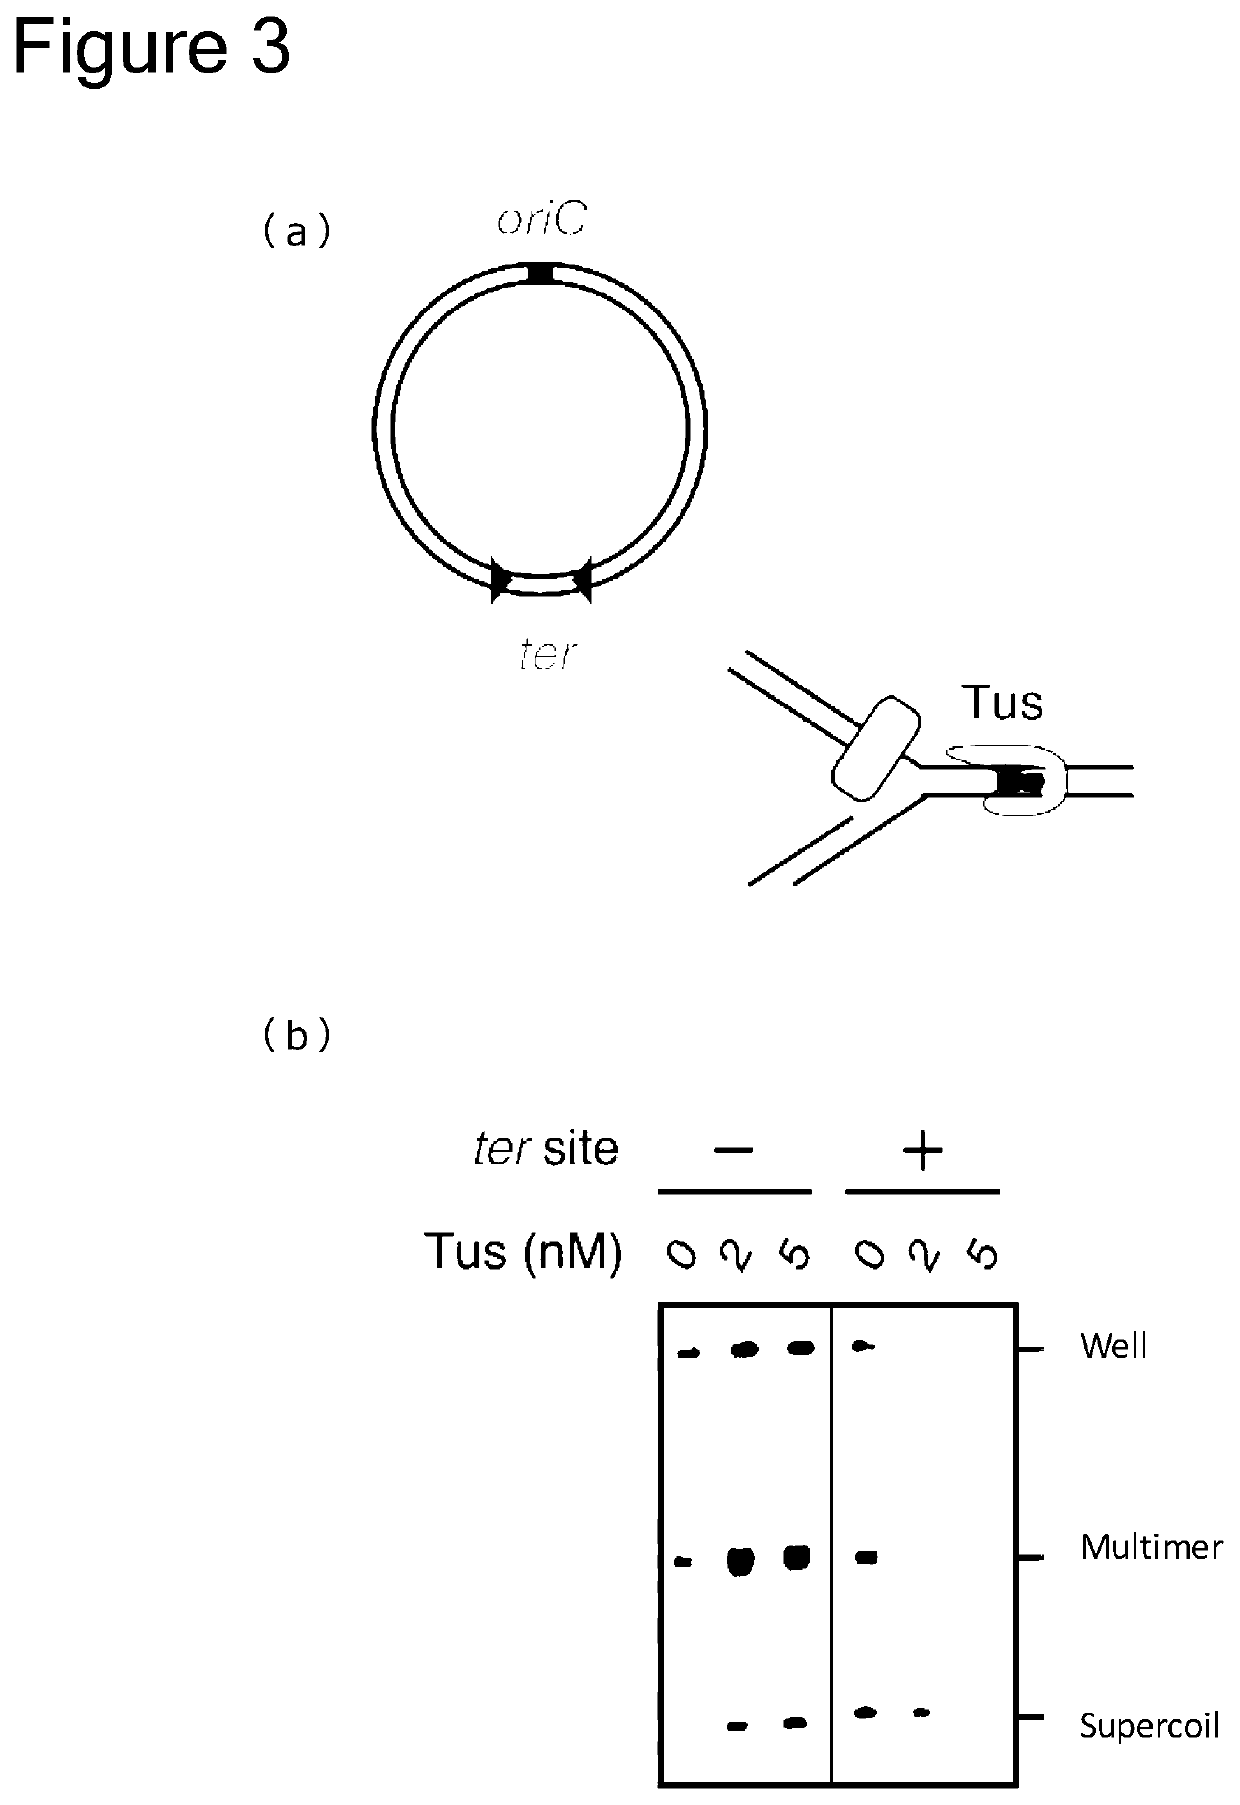 Method of replicating or amplifying circular DNA